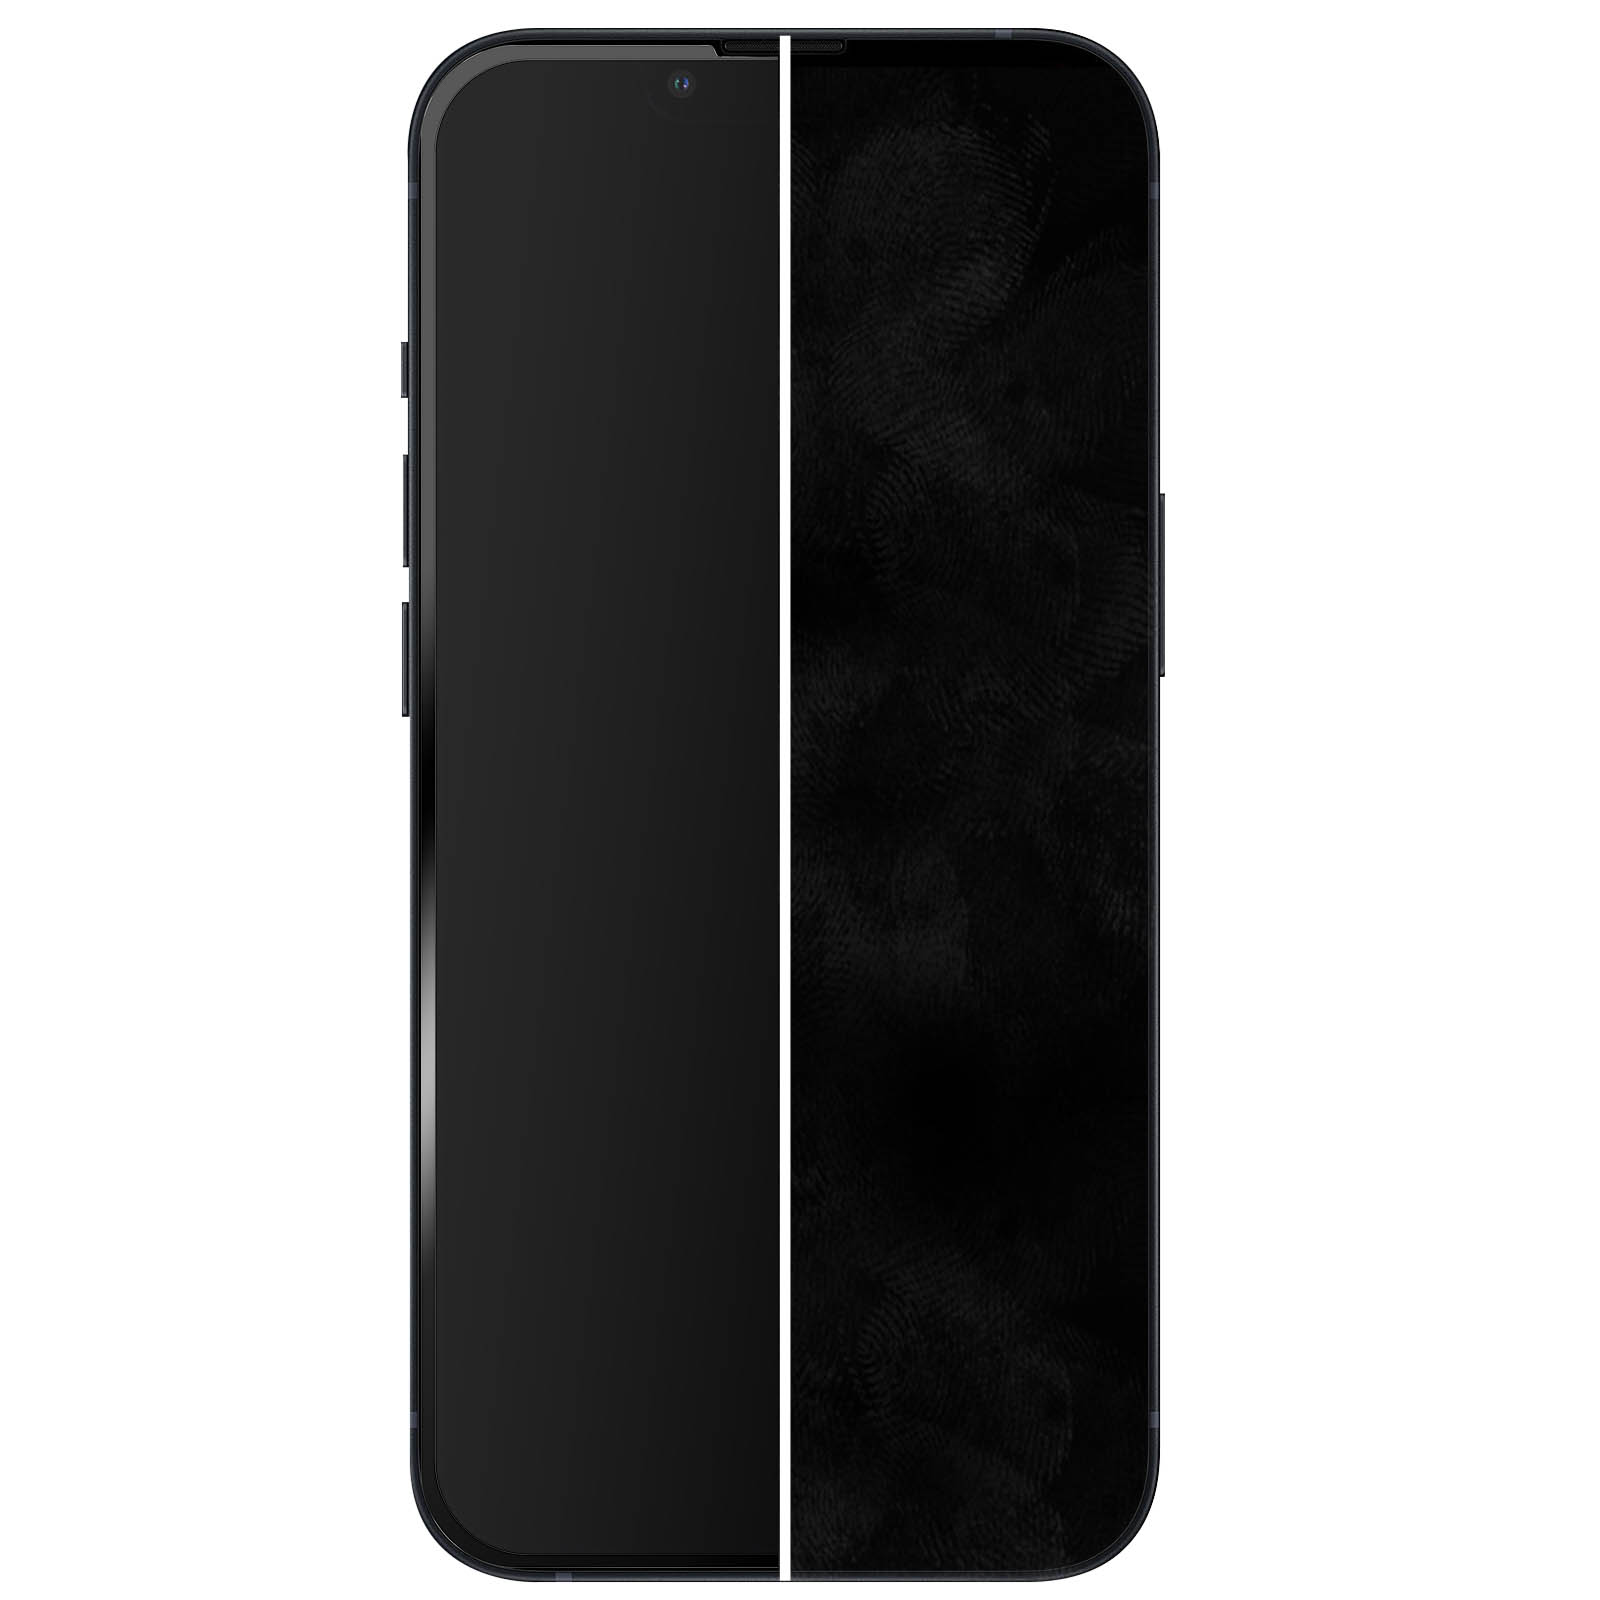 Cristal Templado Muvit Tiger Glass+ iPhone 13 Pro Max, Protector